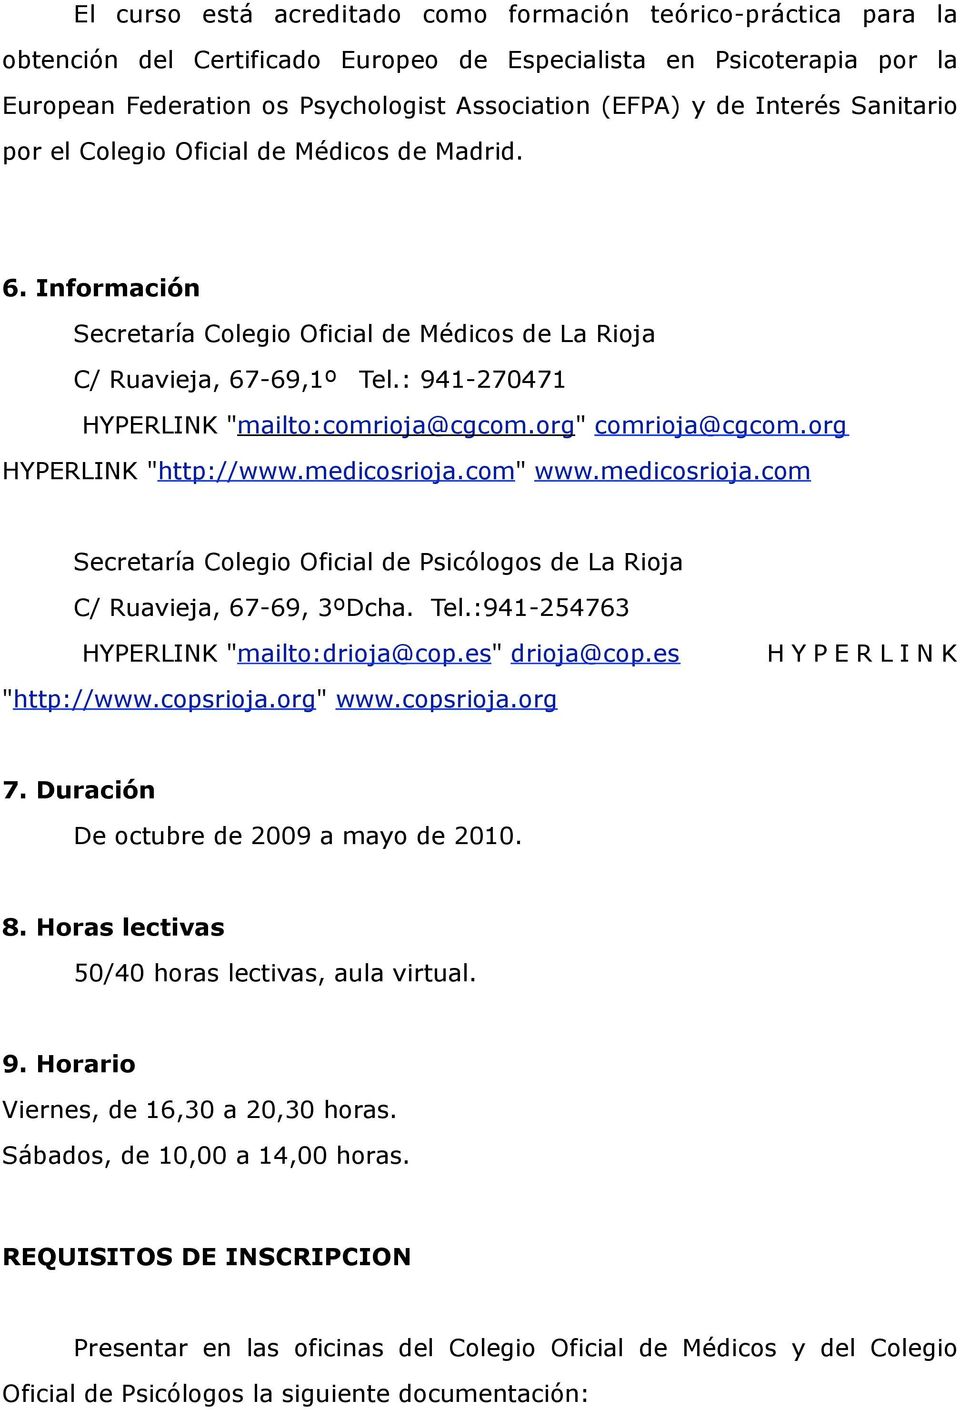 org" comrioja@cgcom.org HYPERLINK "http://www.medicosrioja.com" www.medicosrioja.com Secretaría Colegio Oficial de Psicólogos de La Rioja C/ Ruavieja, 67-69, 3ºDcha. Tel.